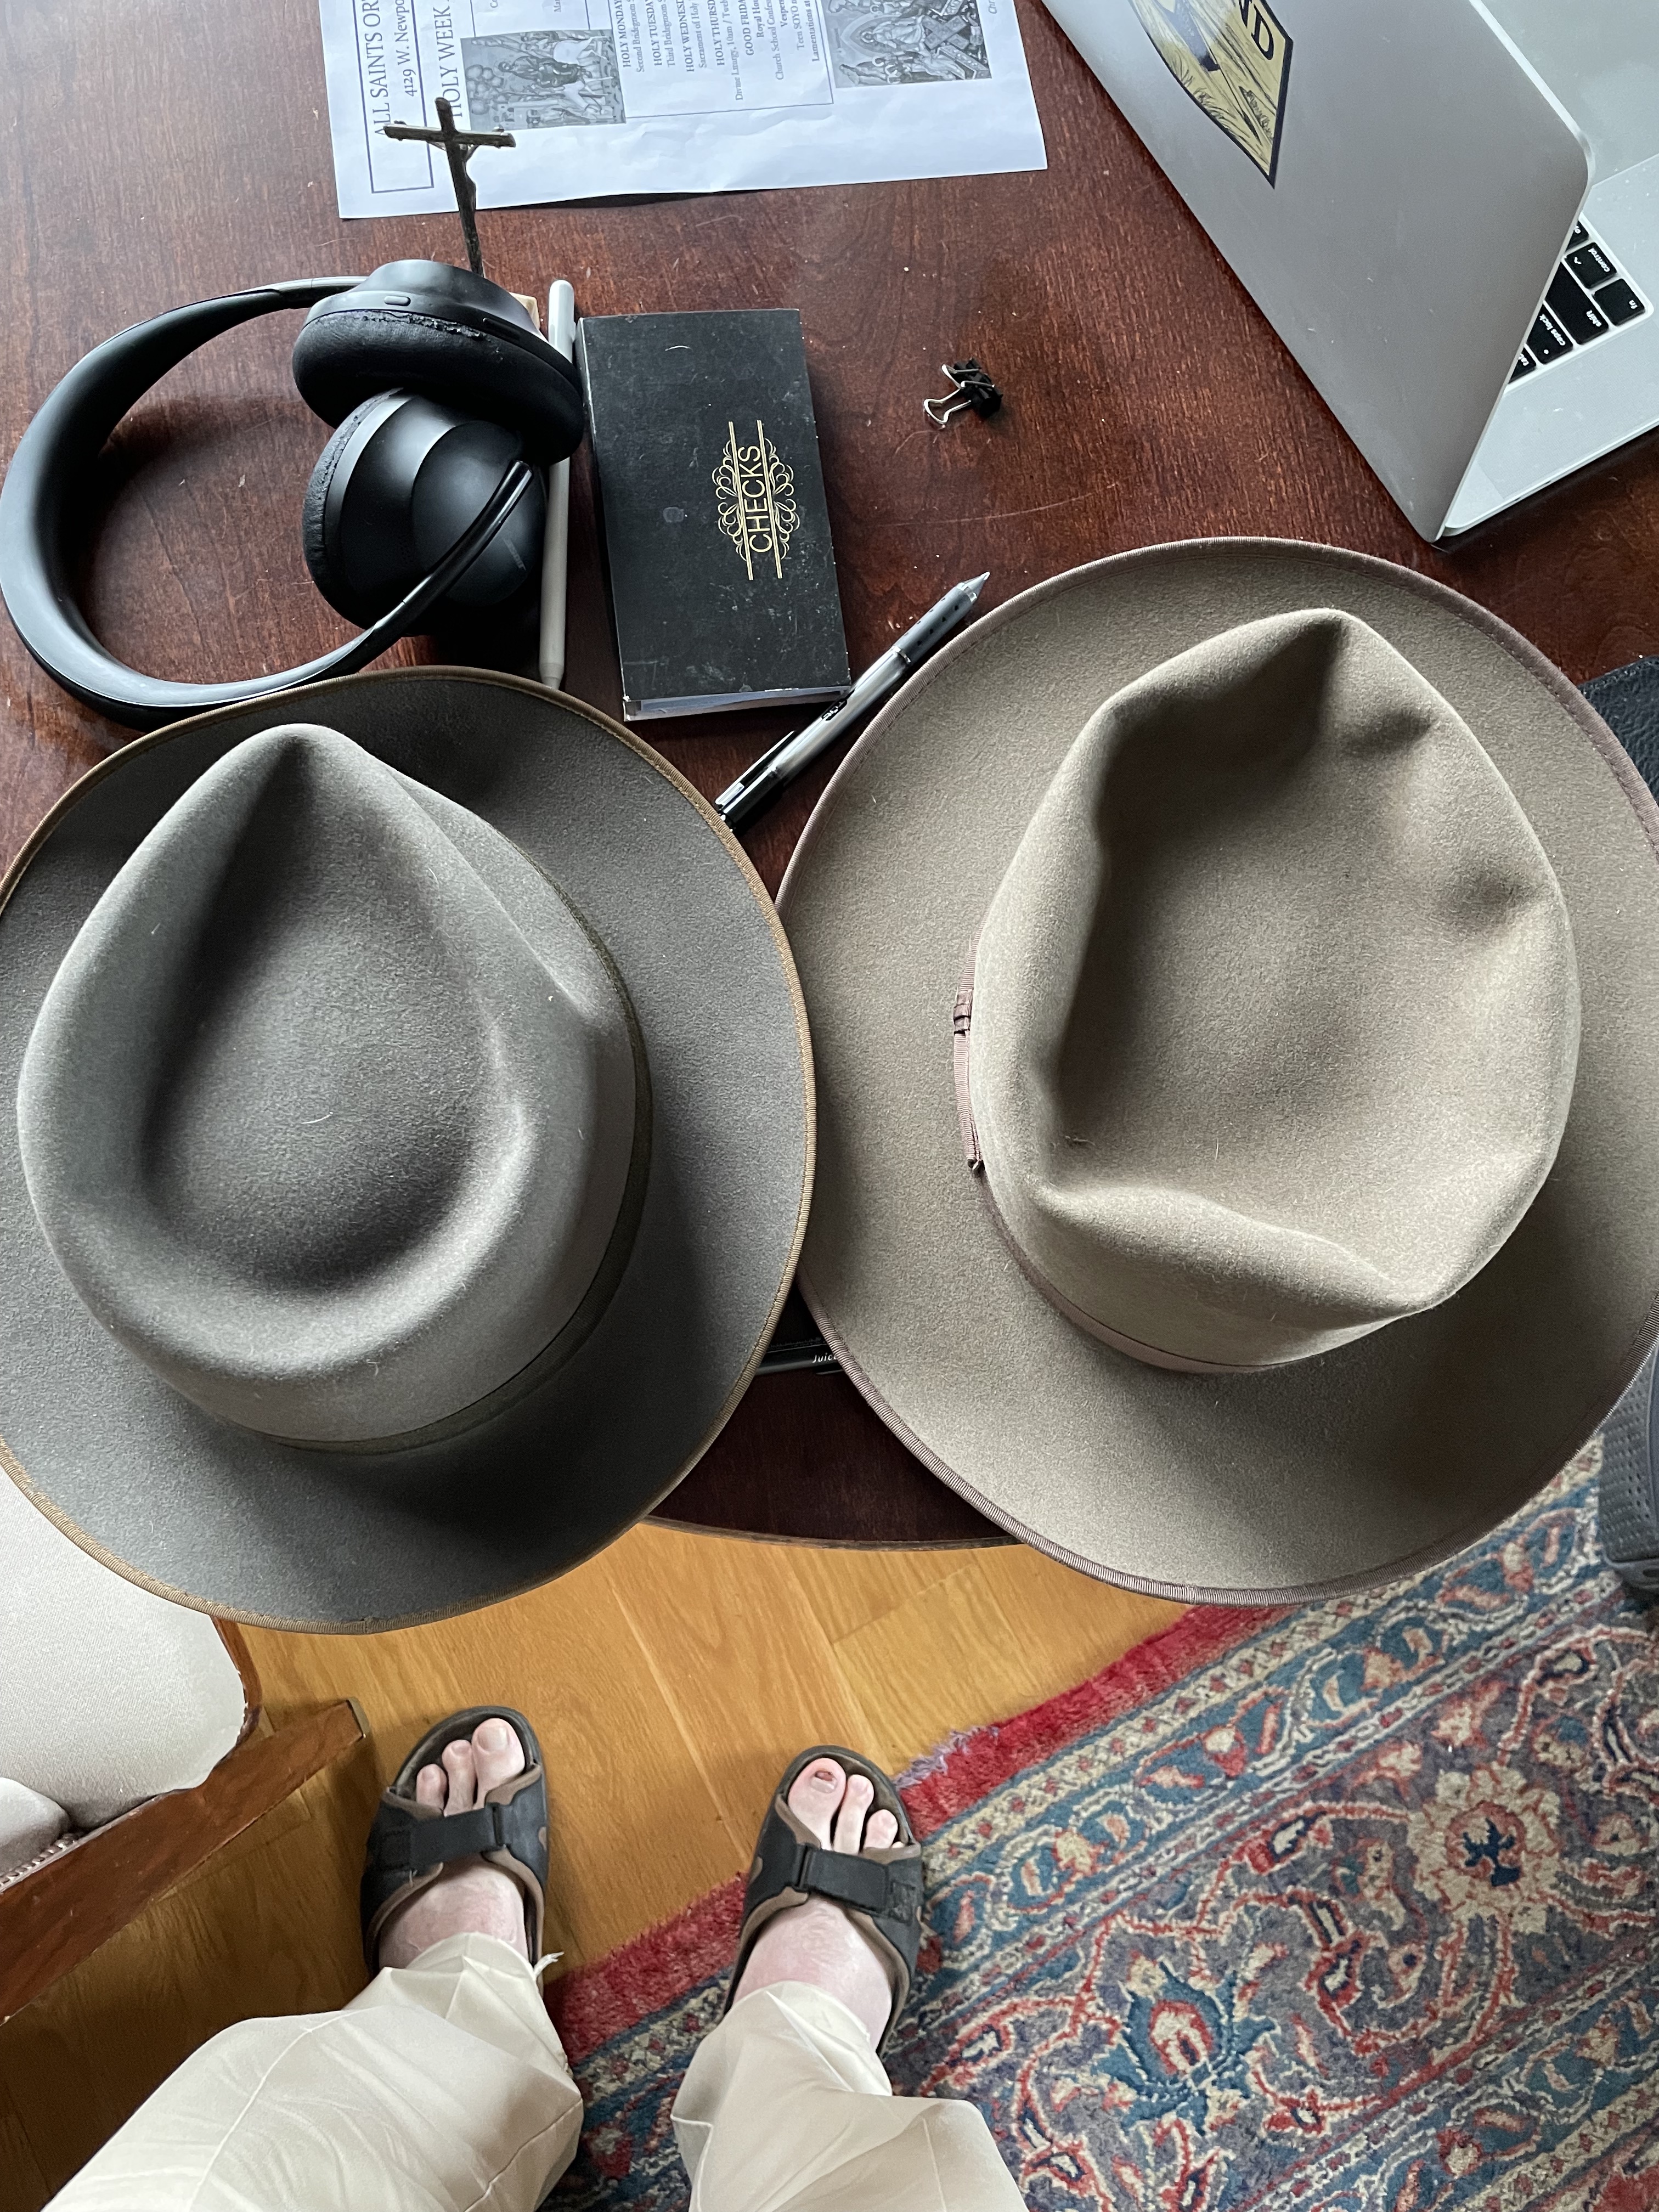 2 hats.jpg